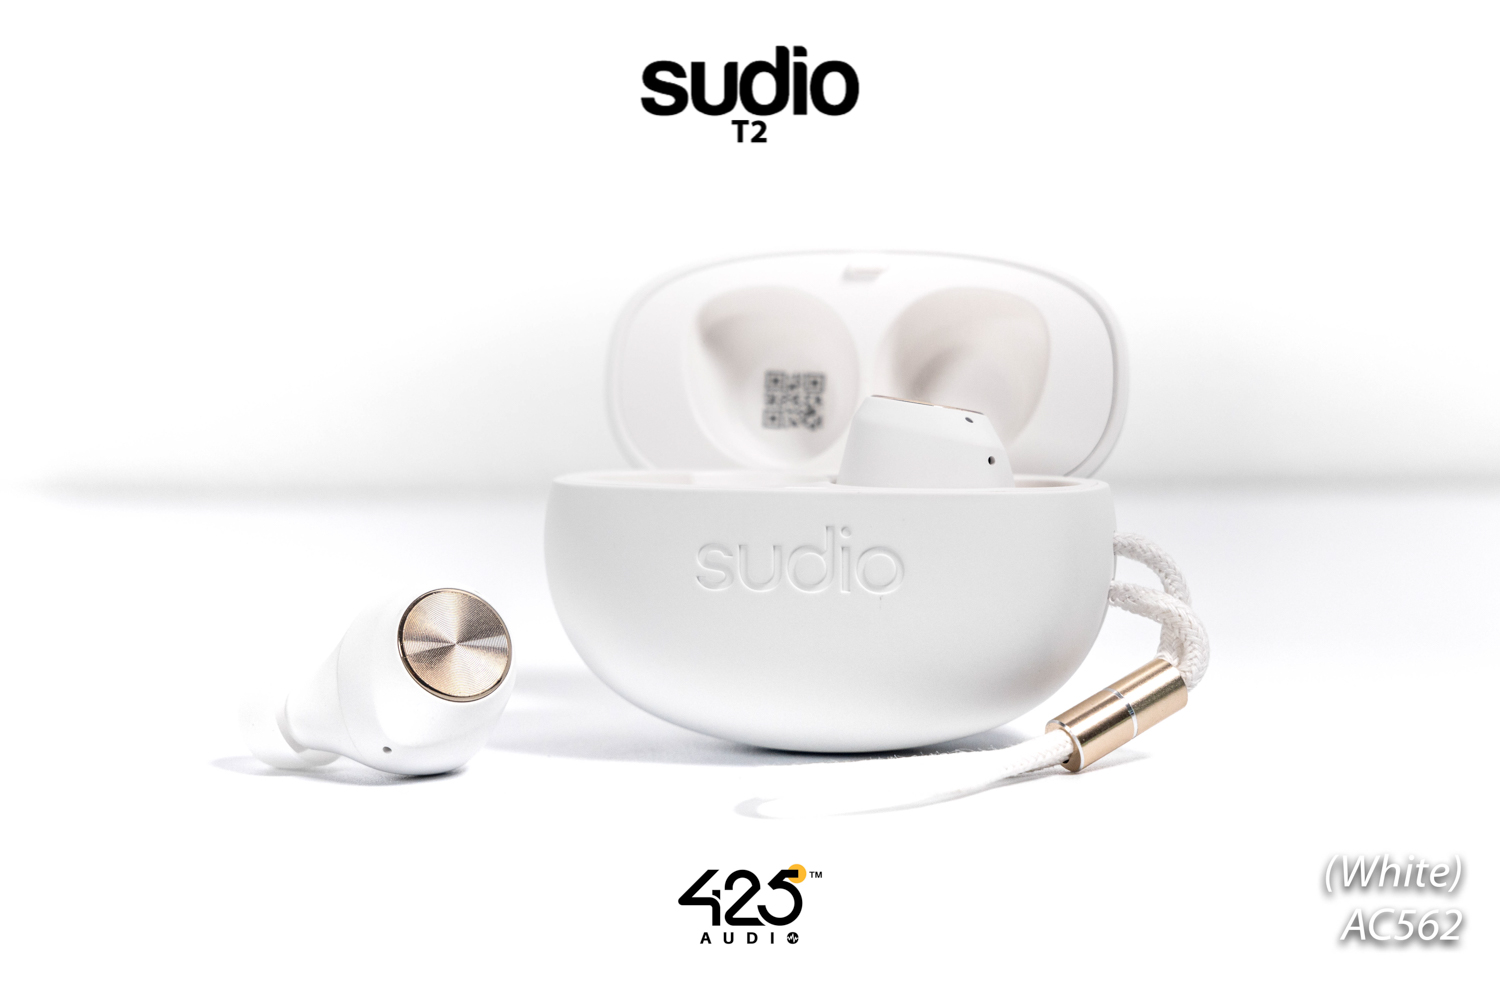 Sudio T2,sudio t2,หูฟังไร้สาย,หูฟังตัดเสียงรบกวน,แนะนำหูฟังไร้สาย,หูฟัง sudio,วิธีใช้หูฟังไร้สาย sudio t2,true wireless